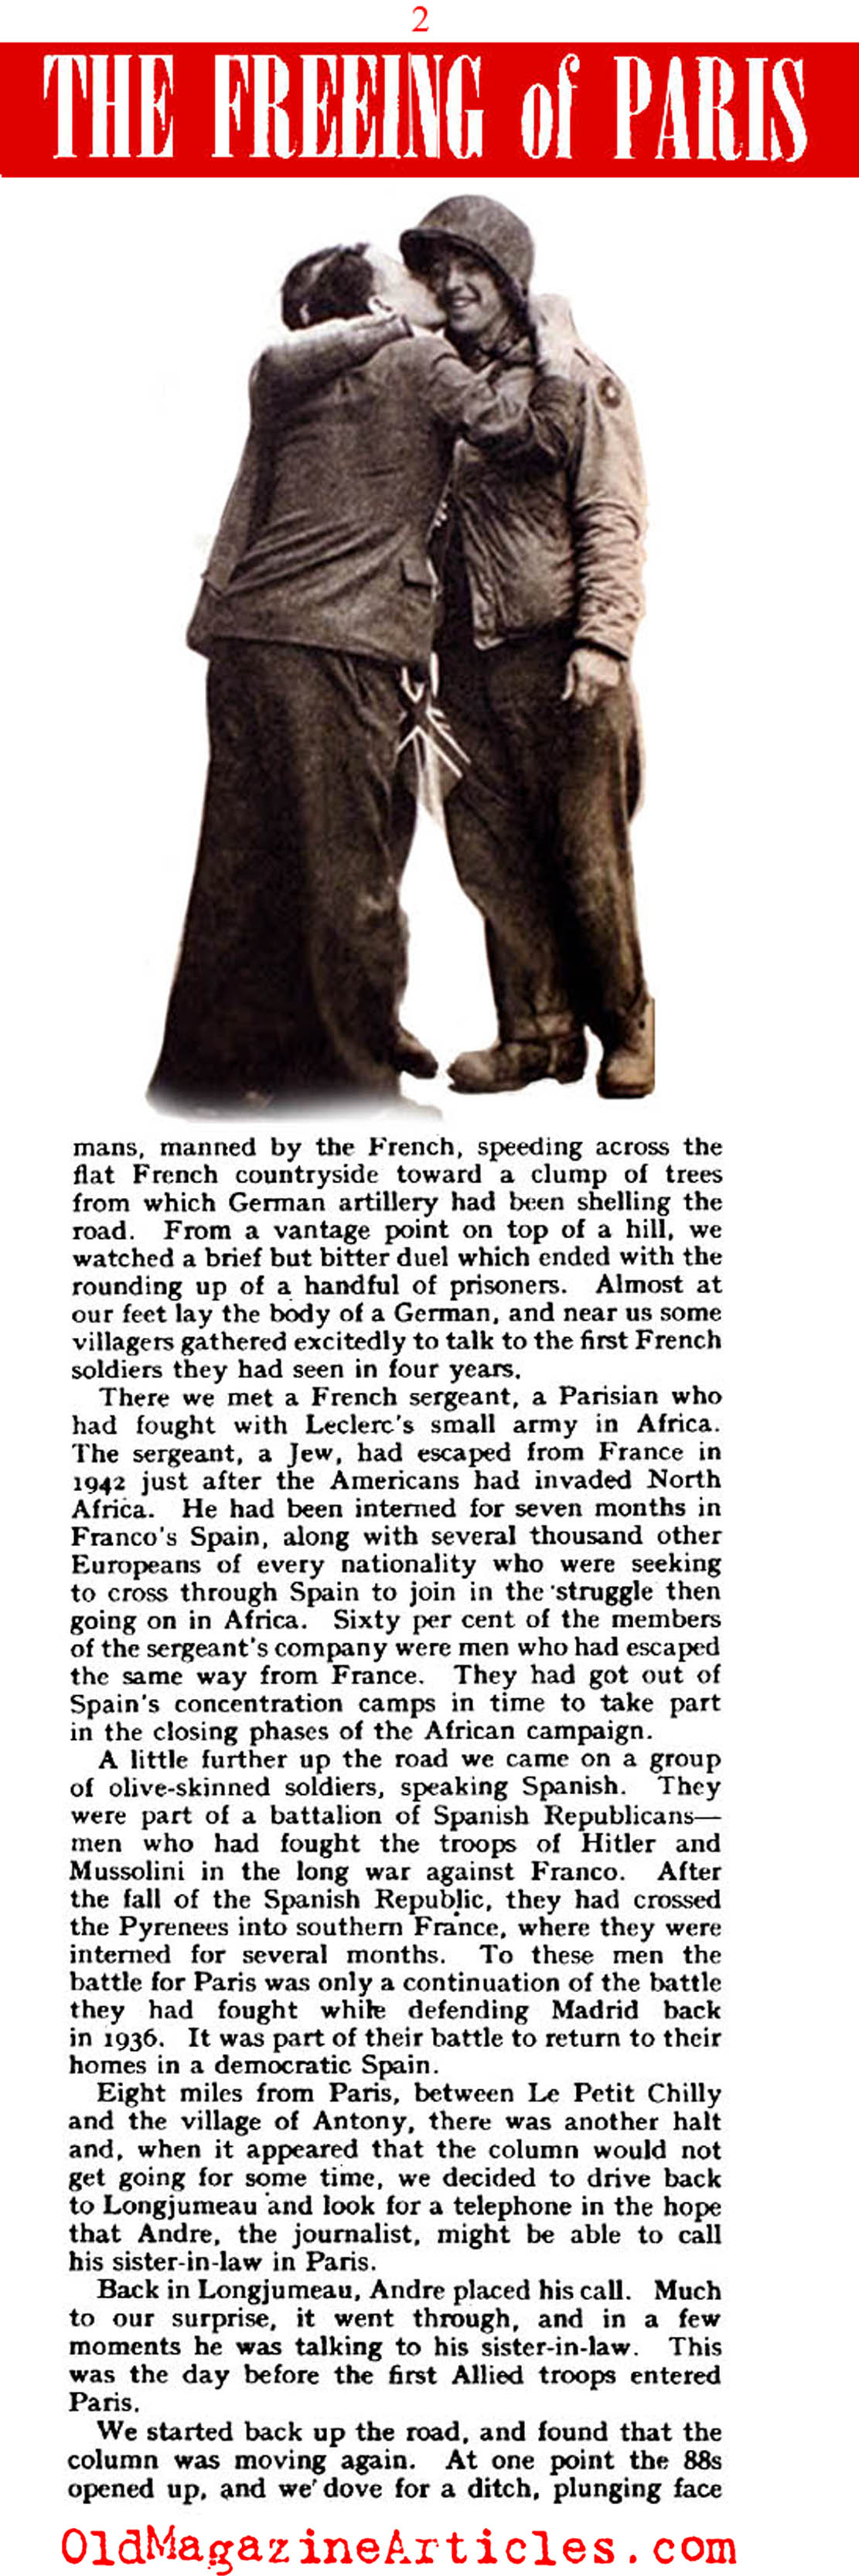 The Liberation of Paris (Yank Magazine, 1944)